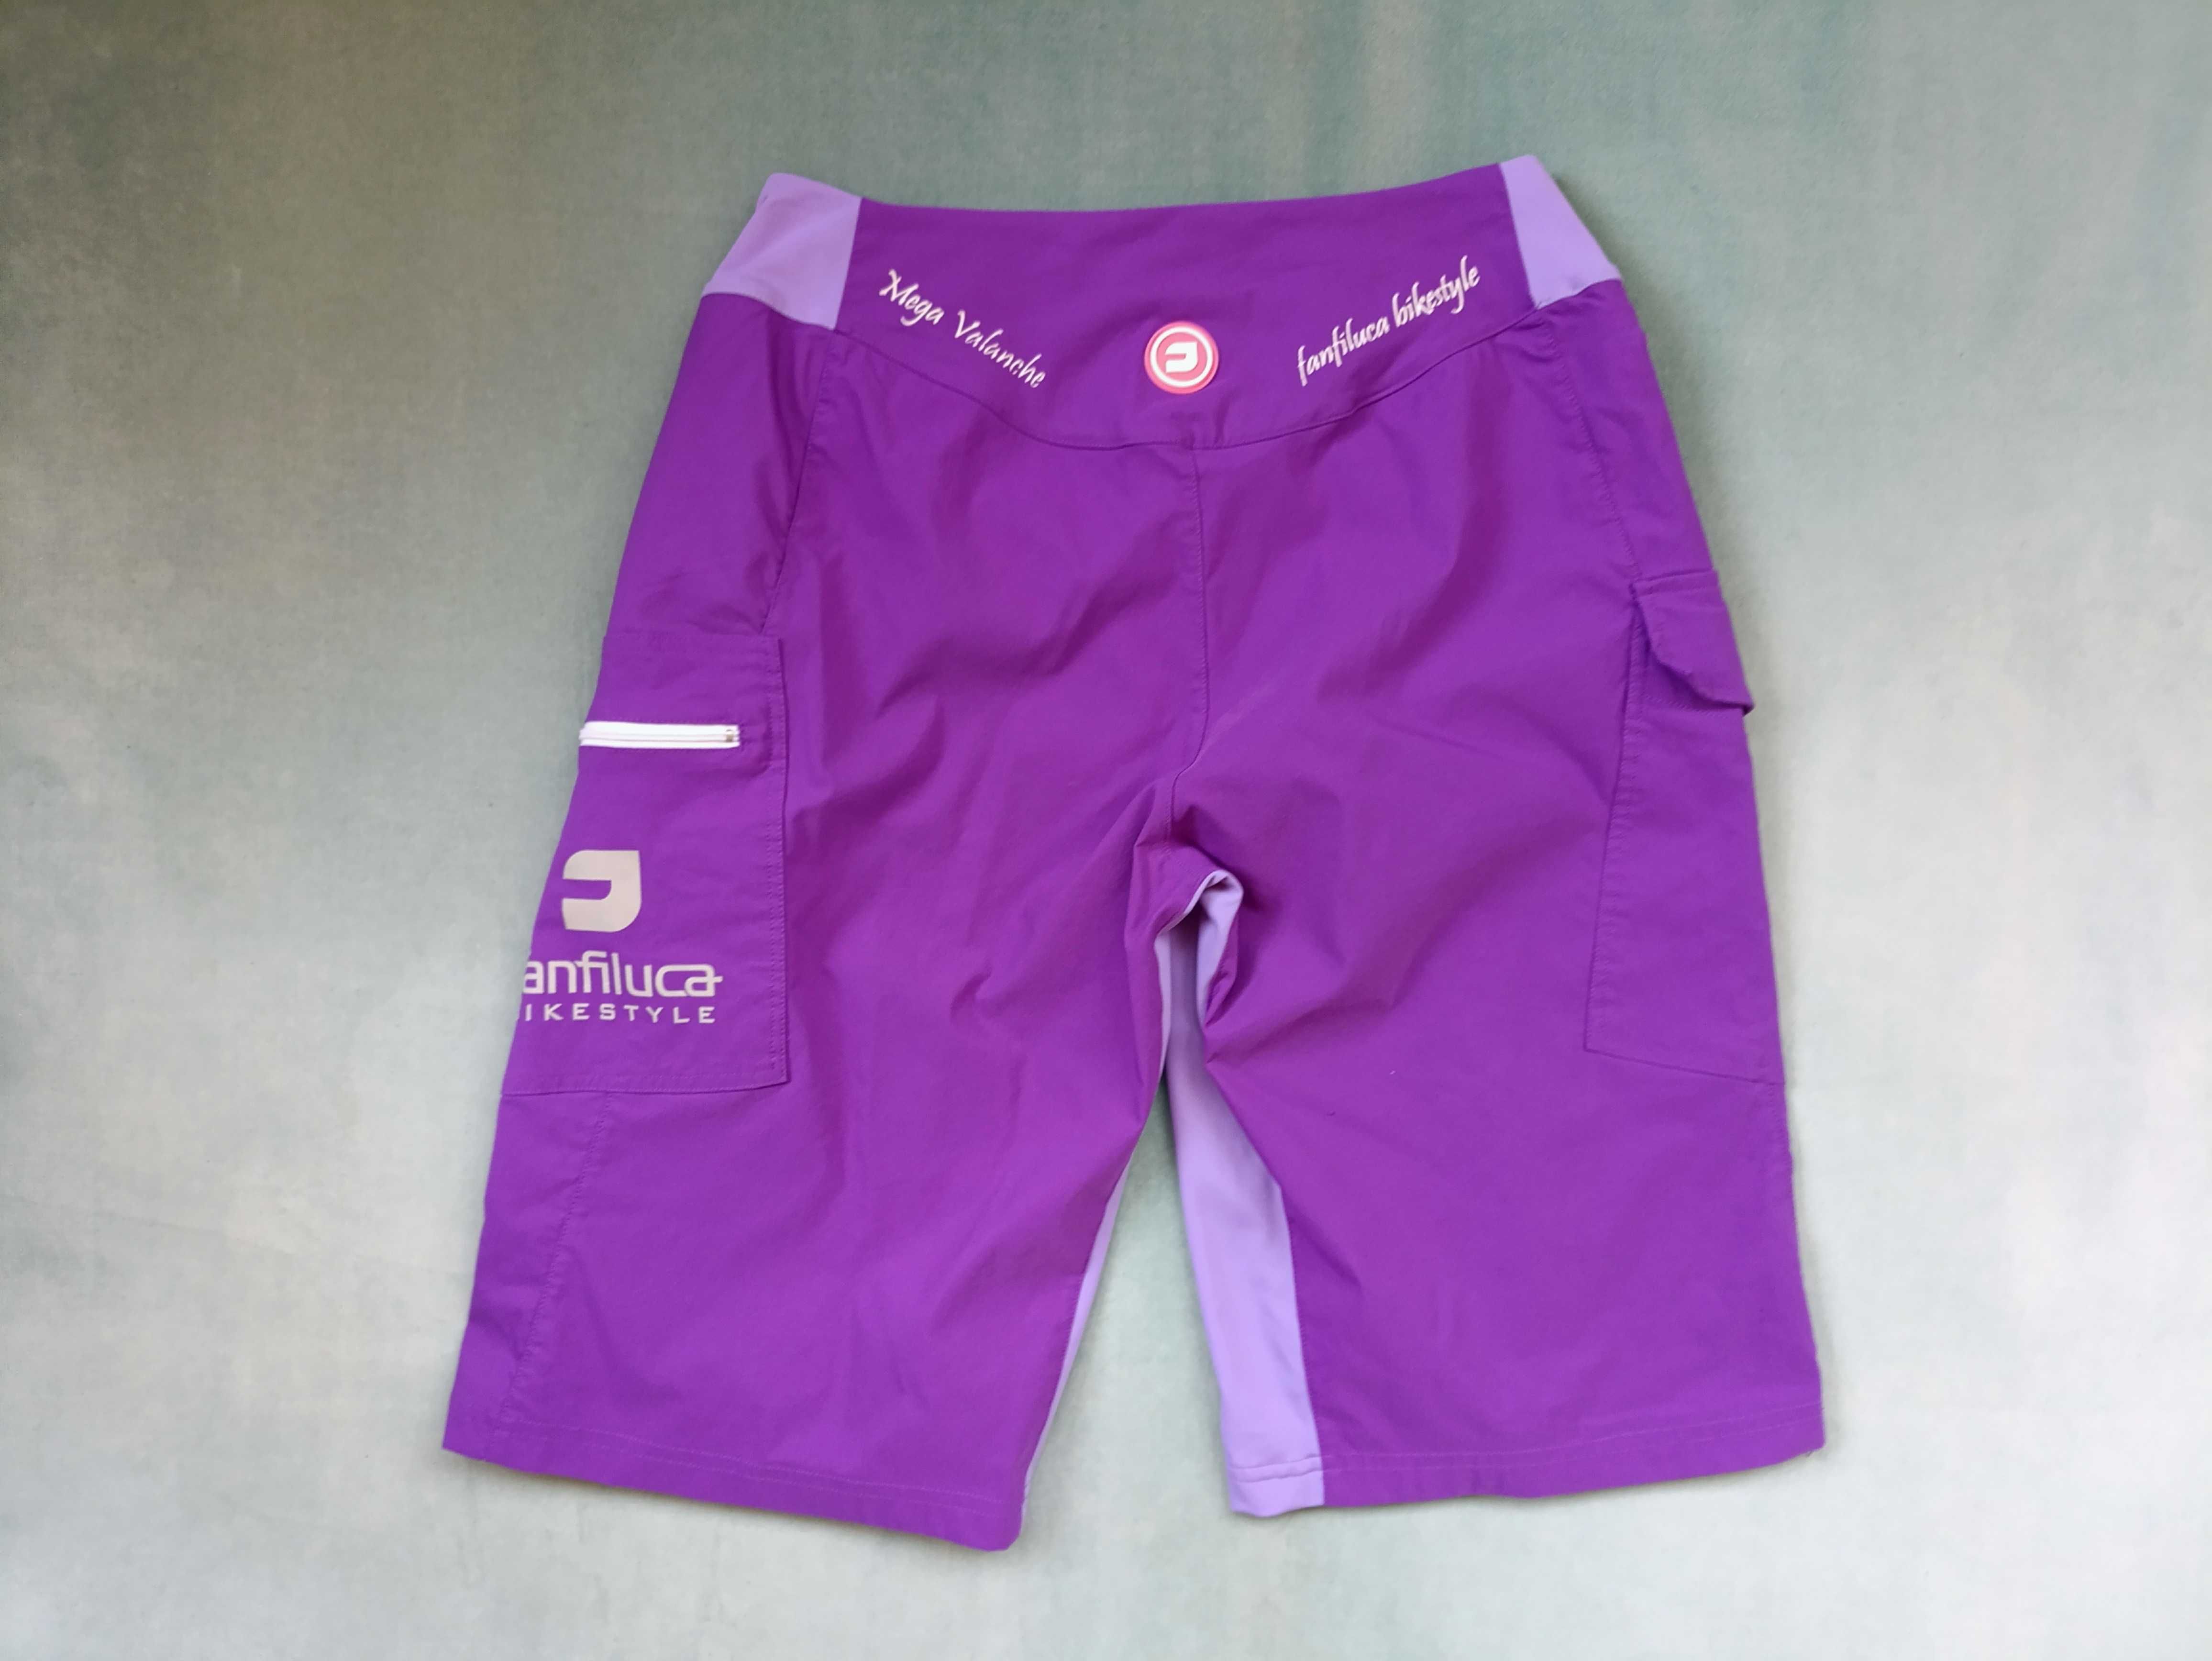 Fanfiluca Valanche® Lady Cycling shorts велошорти стрейч розмір